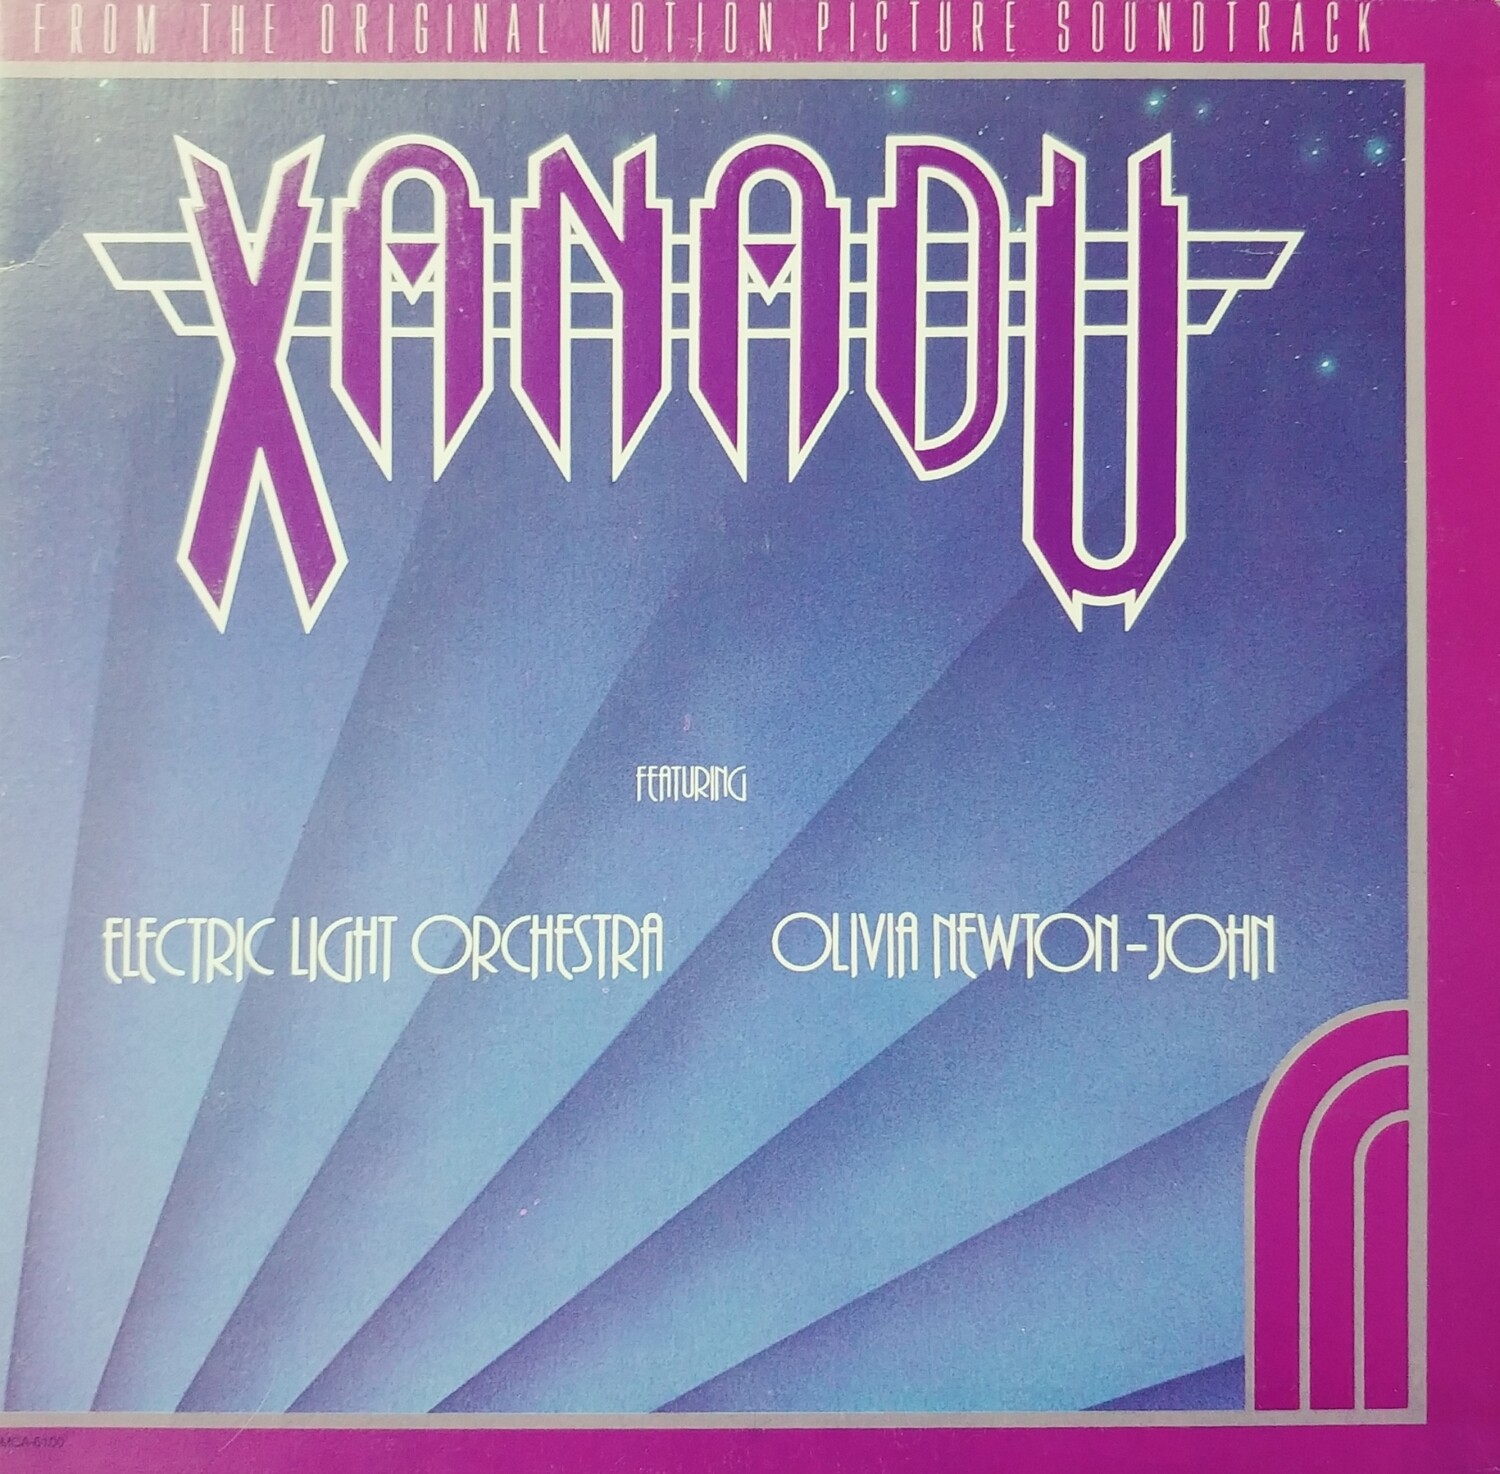 Electric Light Orchestra / Olivia Newton-John - Xanadu